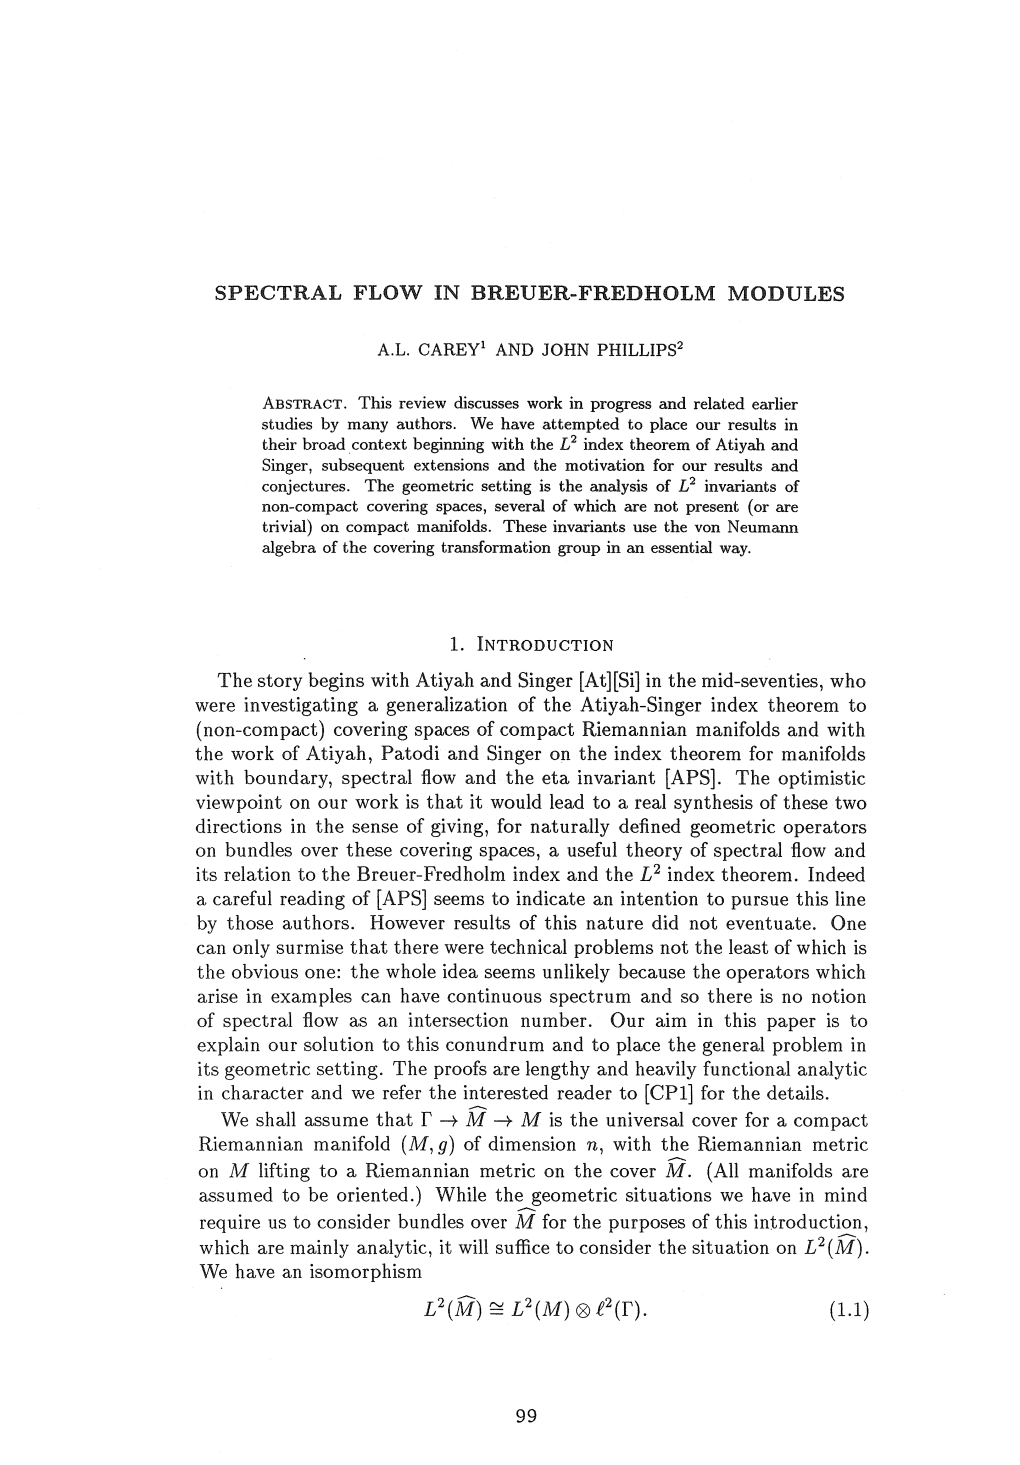 Spectral Flow in Breuer-Fredholm Modules (1.1)